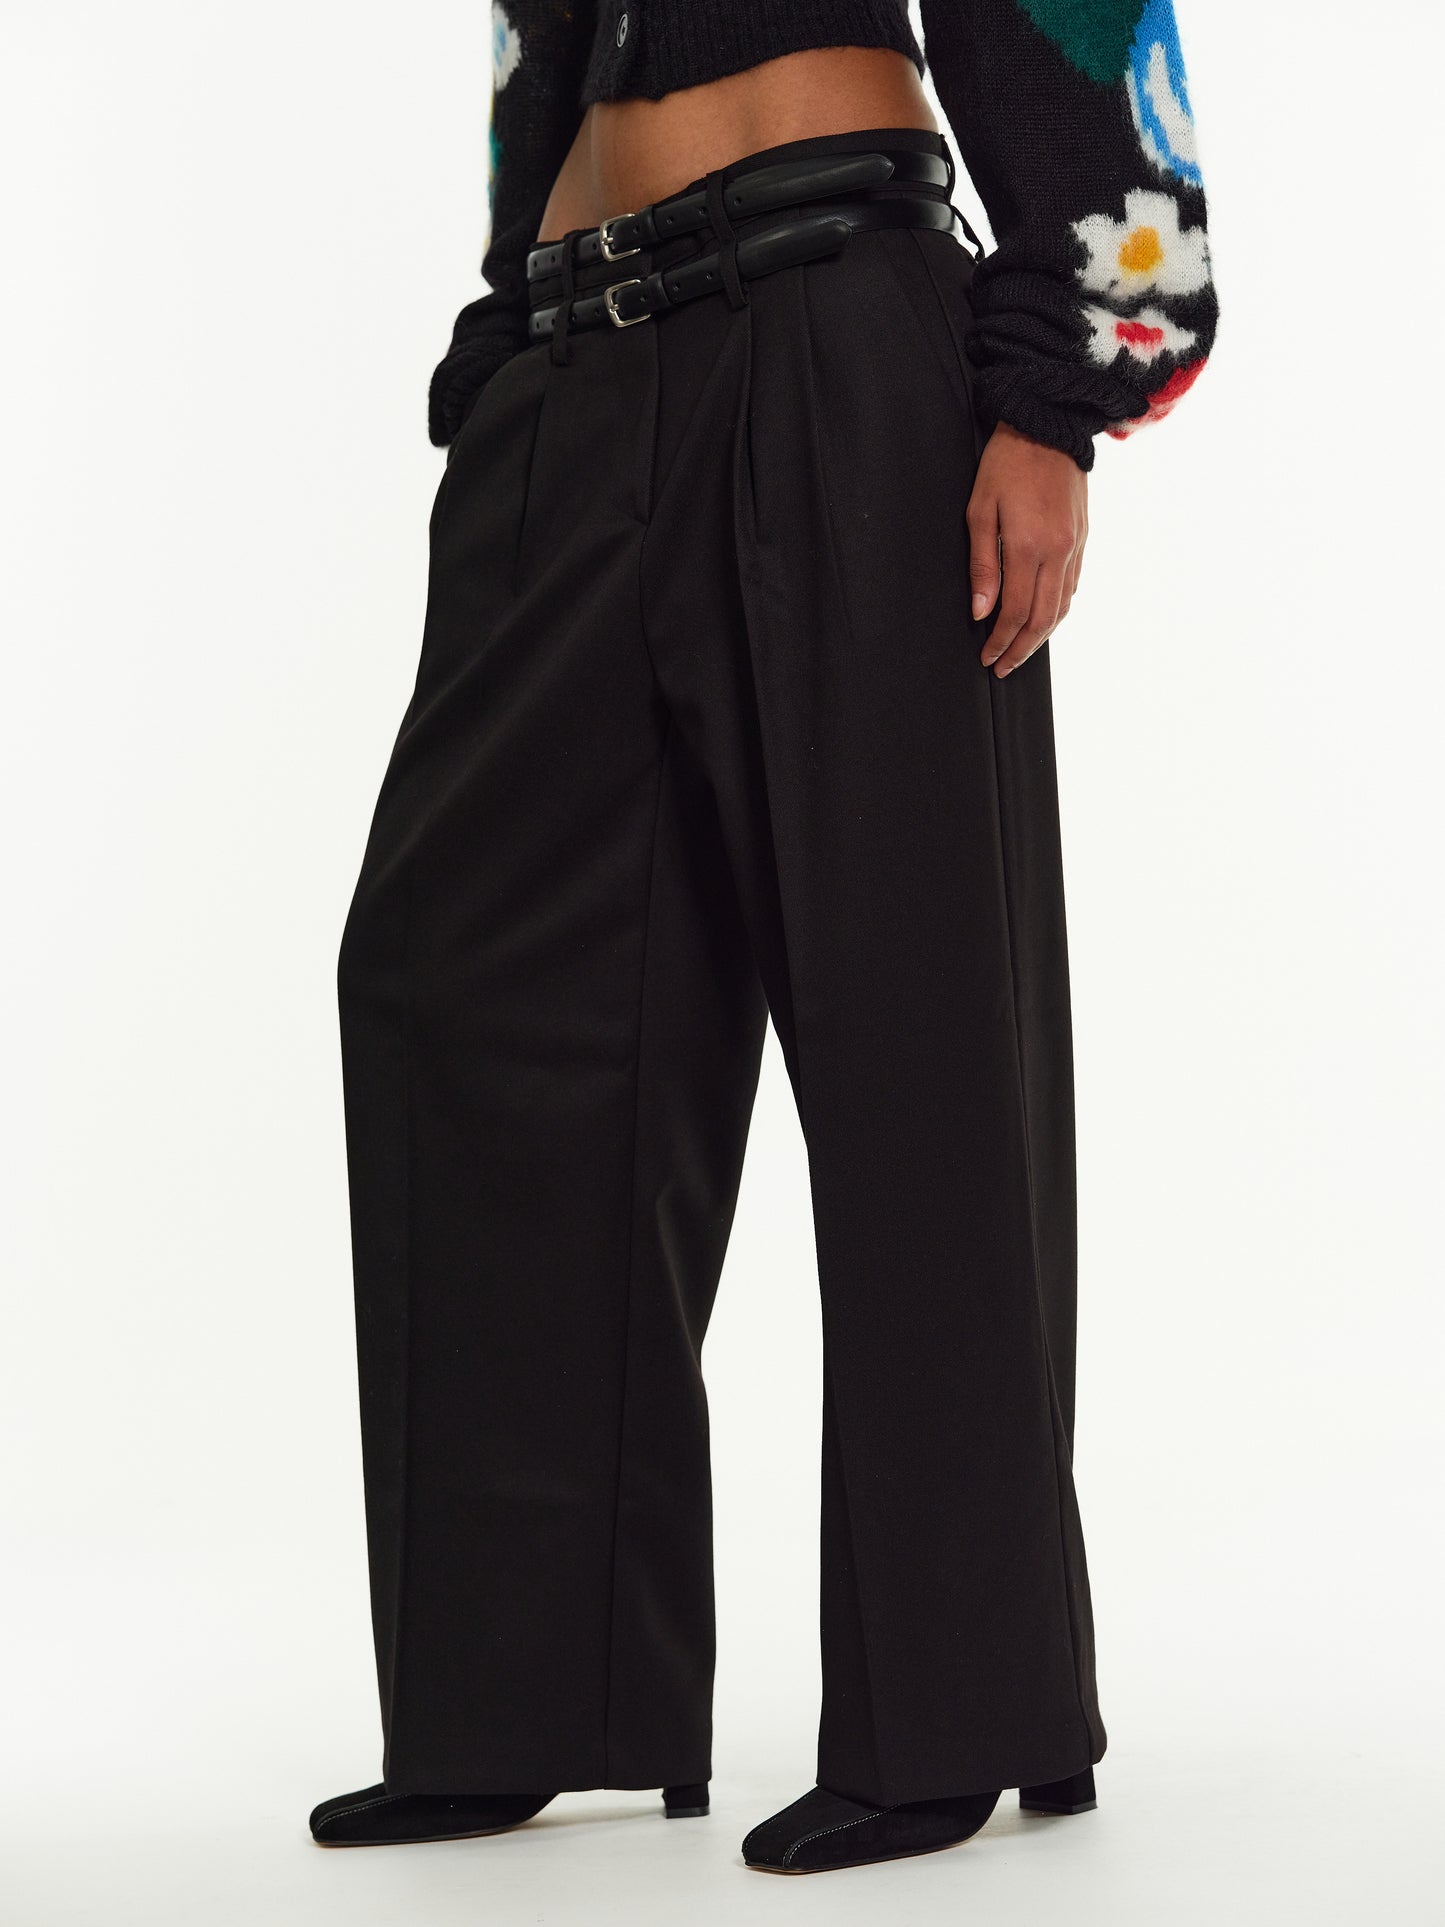 Double Belt Loop Trousers, Black